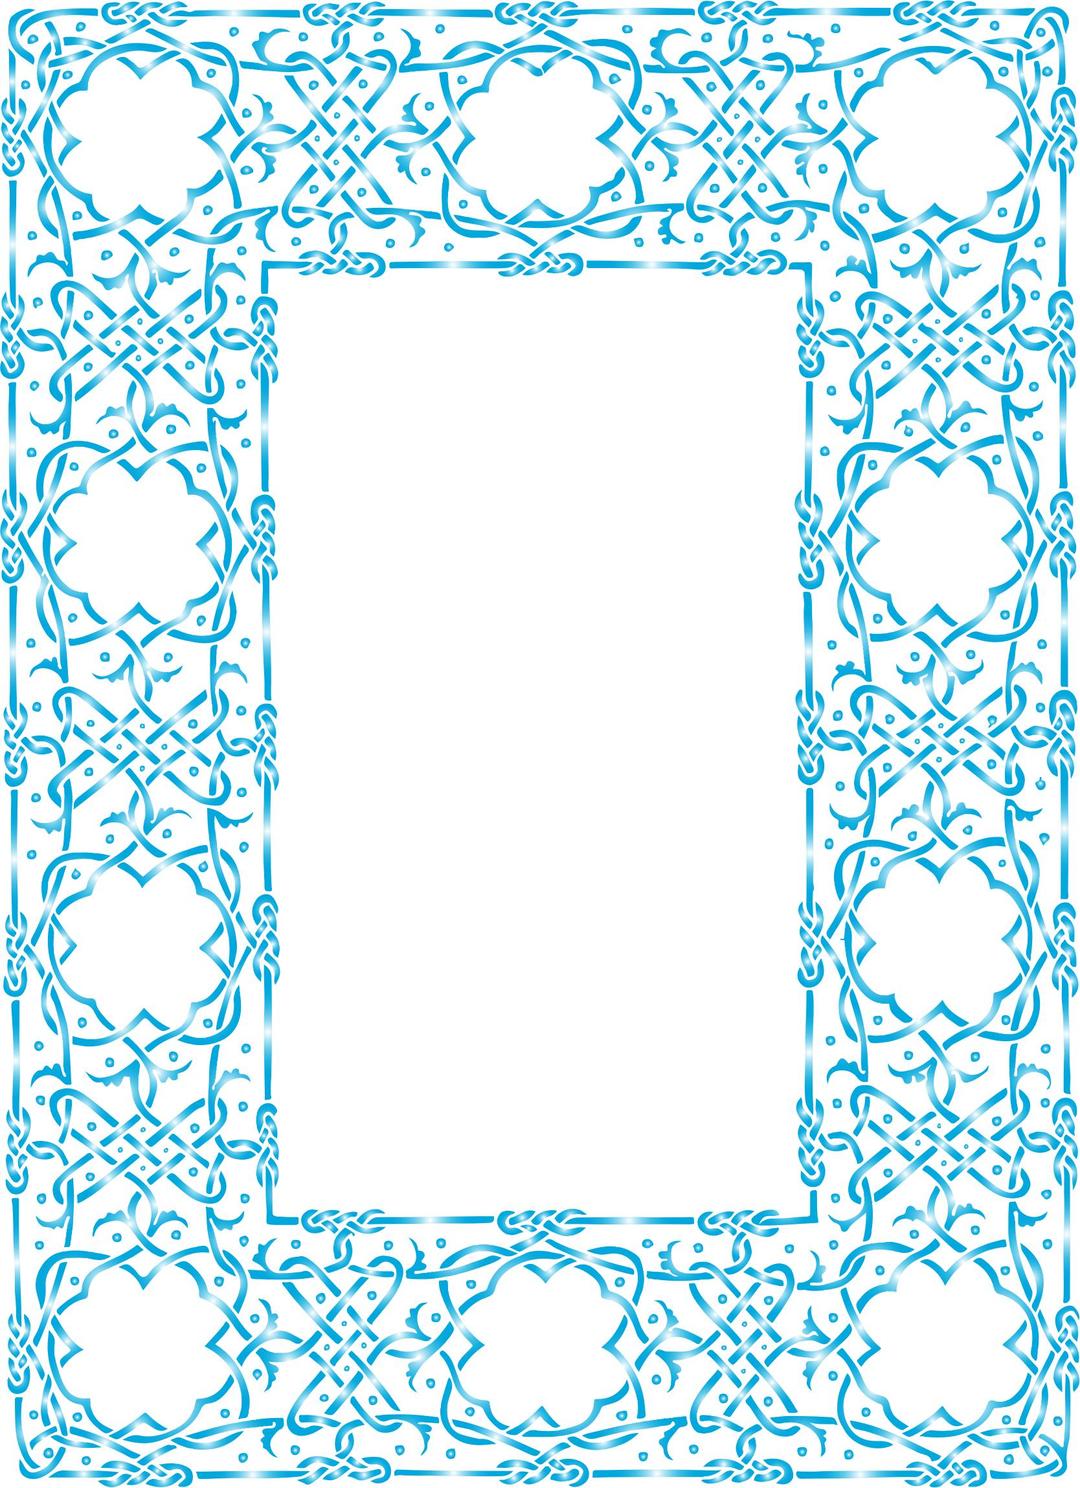 Prismatic Ornate Geometric Frame No Background png transparent